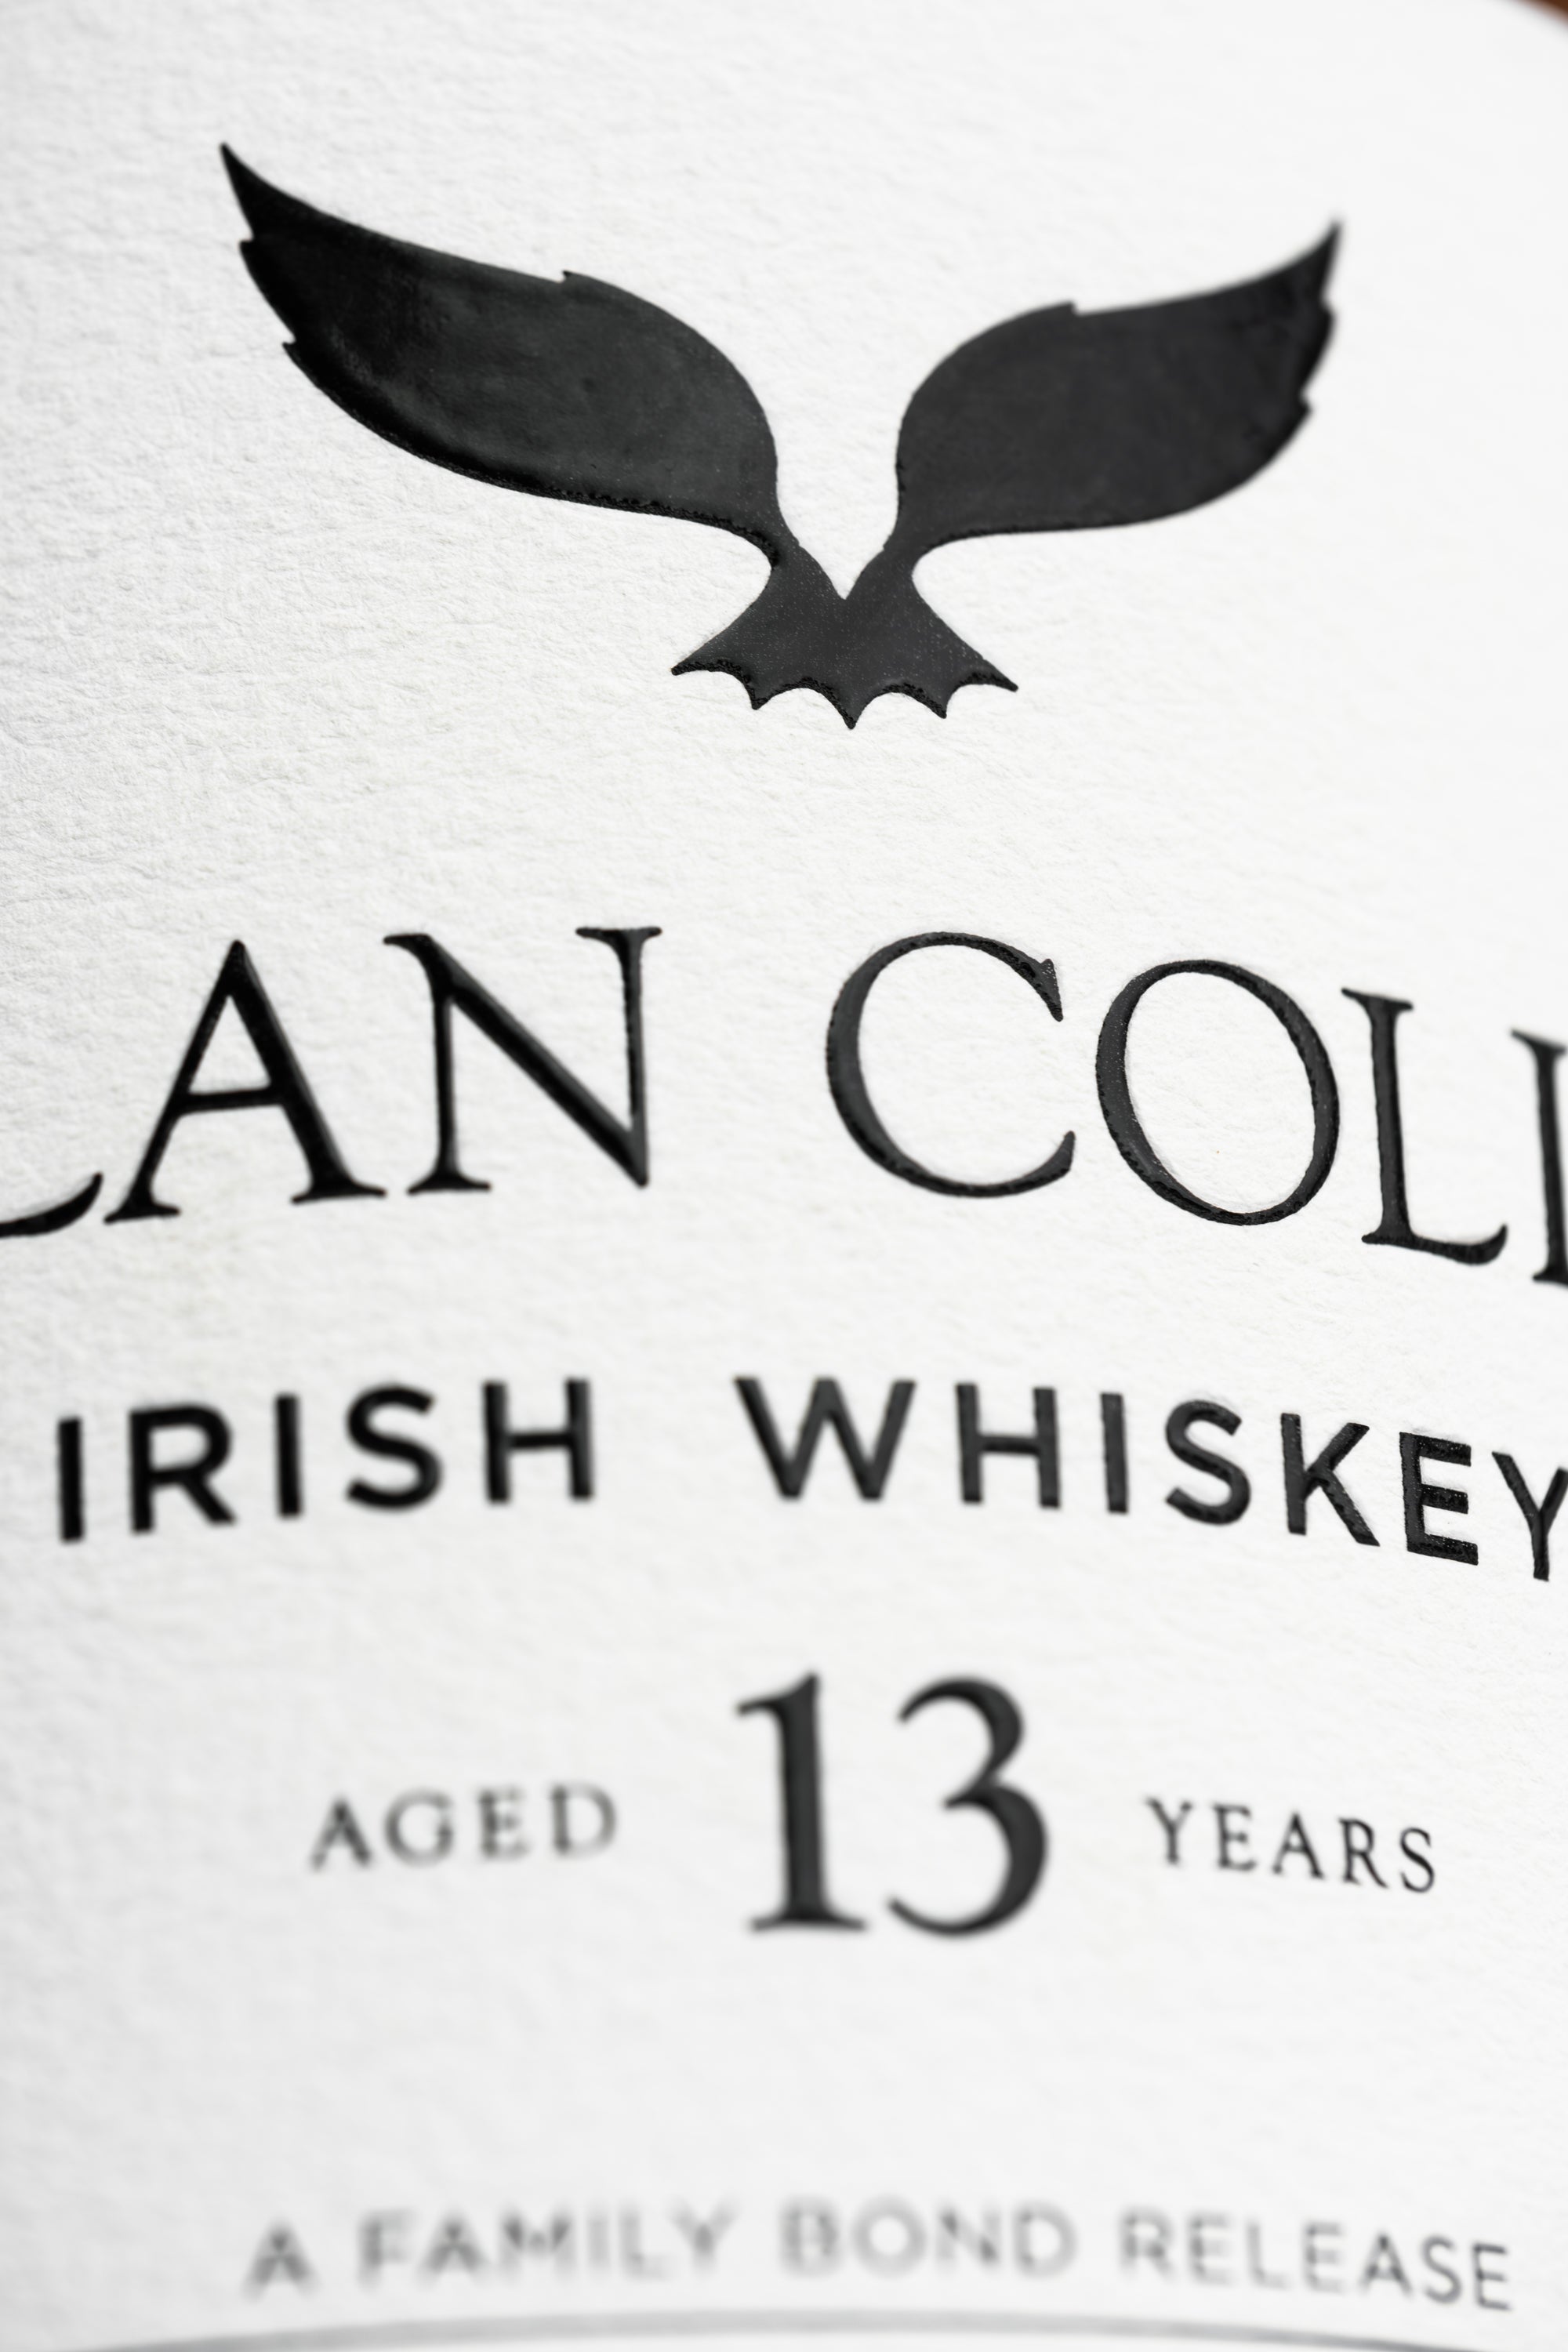 Clan Colla Irish Whiskey 13 YO